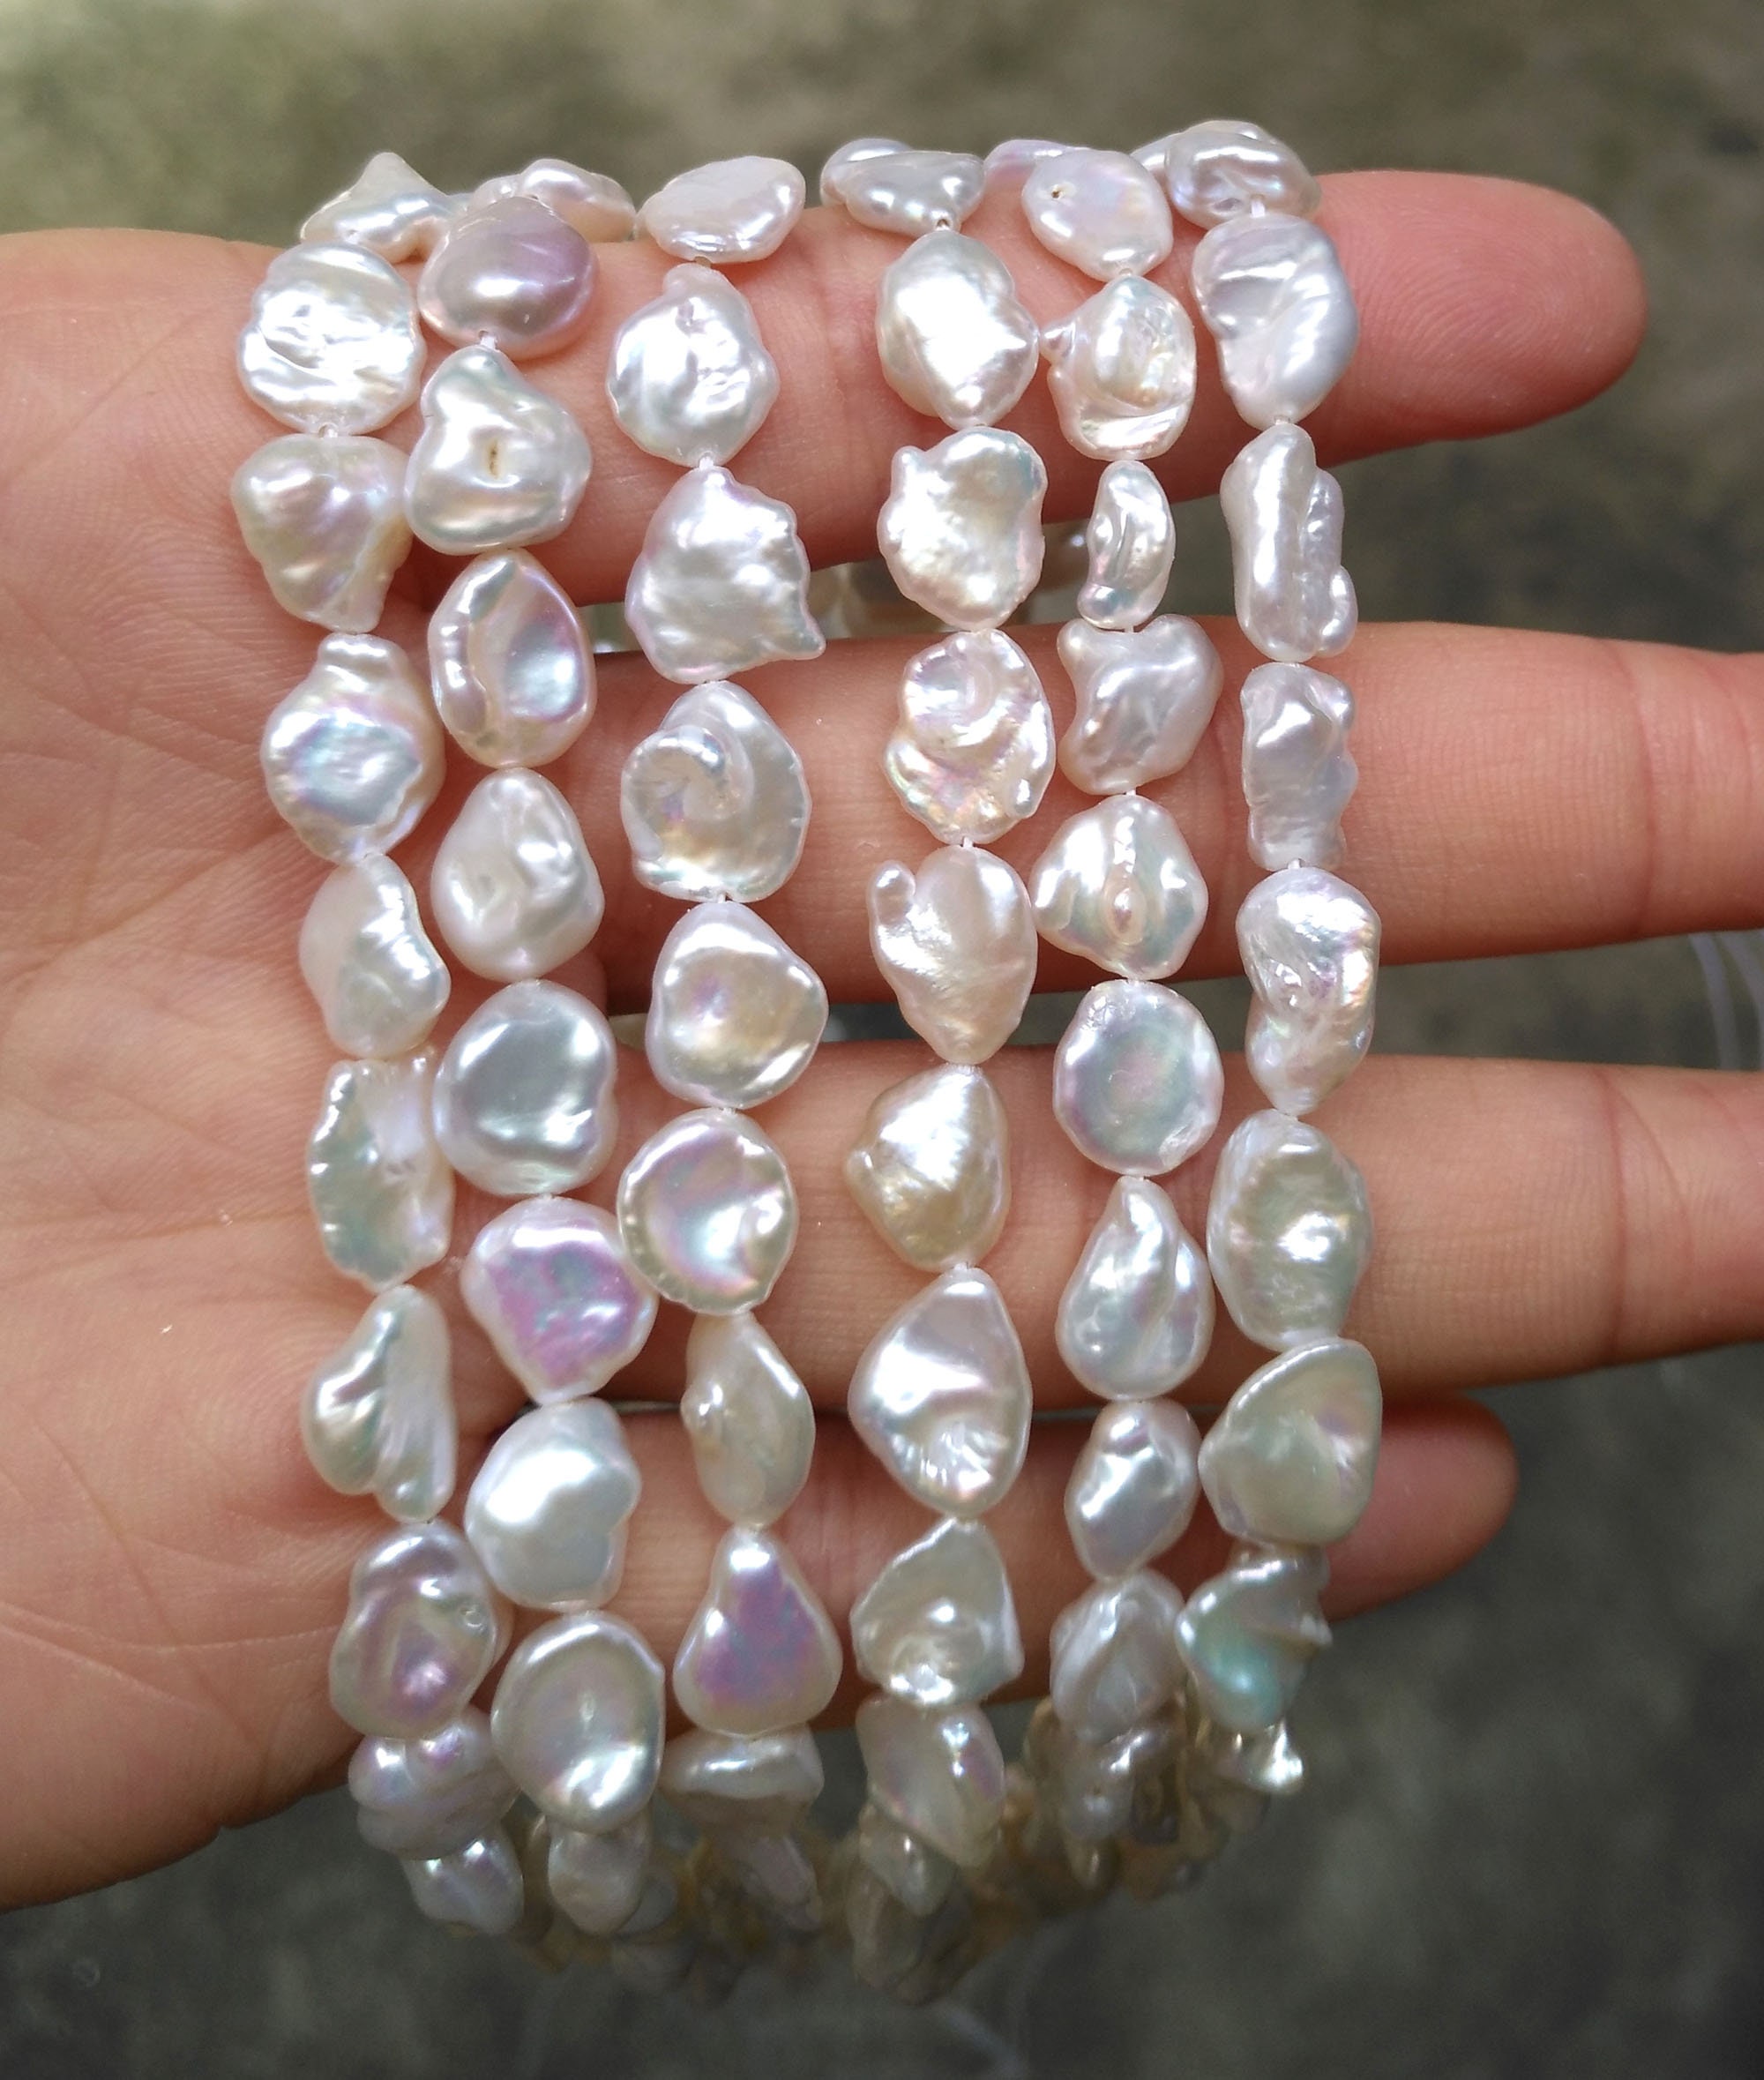 3.5-5 mm Natural White Keshi Nugget Freshwater Pearl Beads Center Drilled  Keshi Pearls Genuine Freshwater Tiny Keshi Nugget Pearls #234